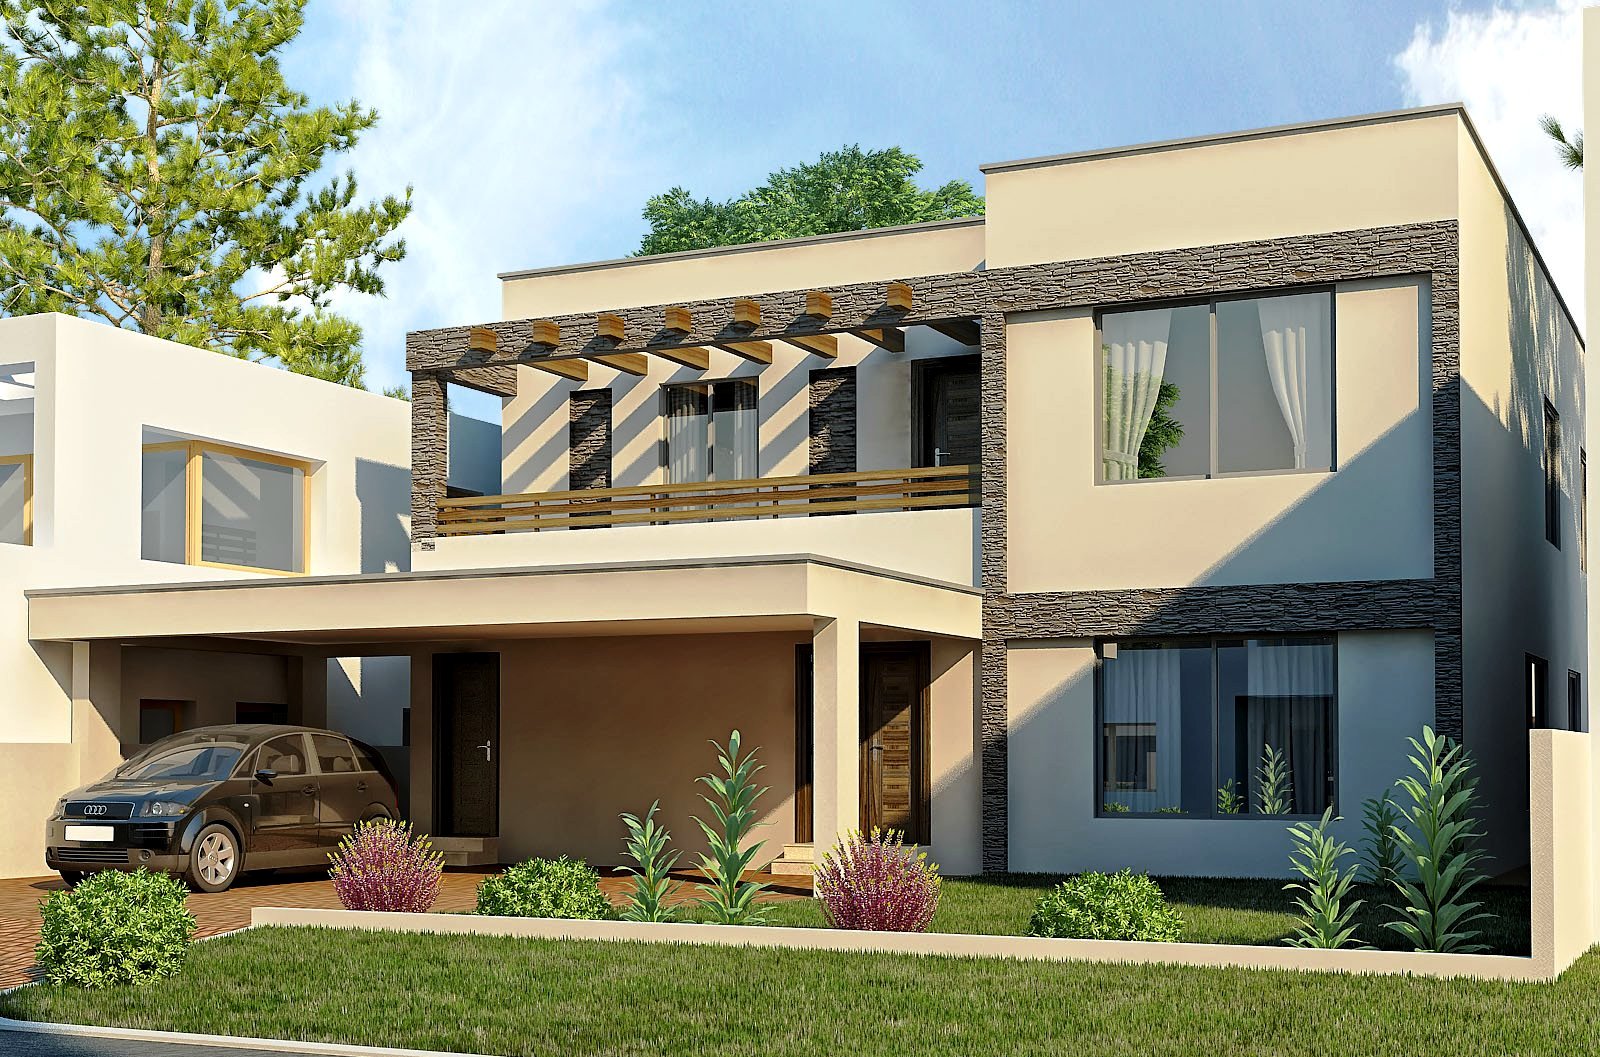 New home designs latest.: Modern homes exterior designs views.